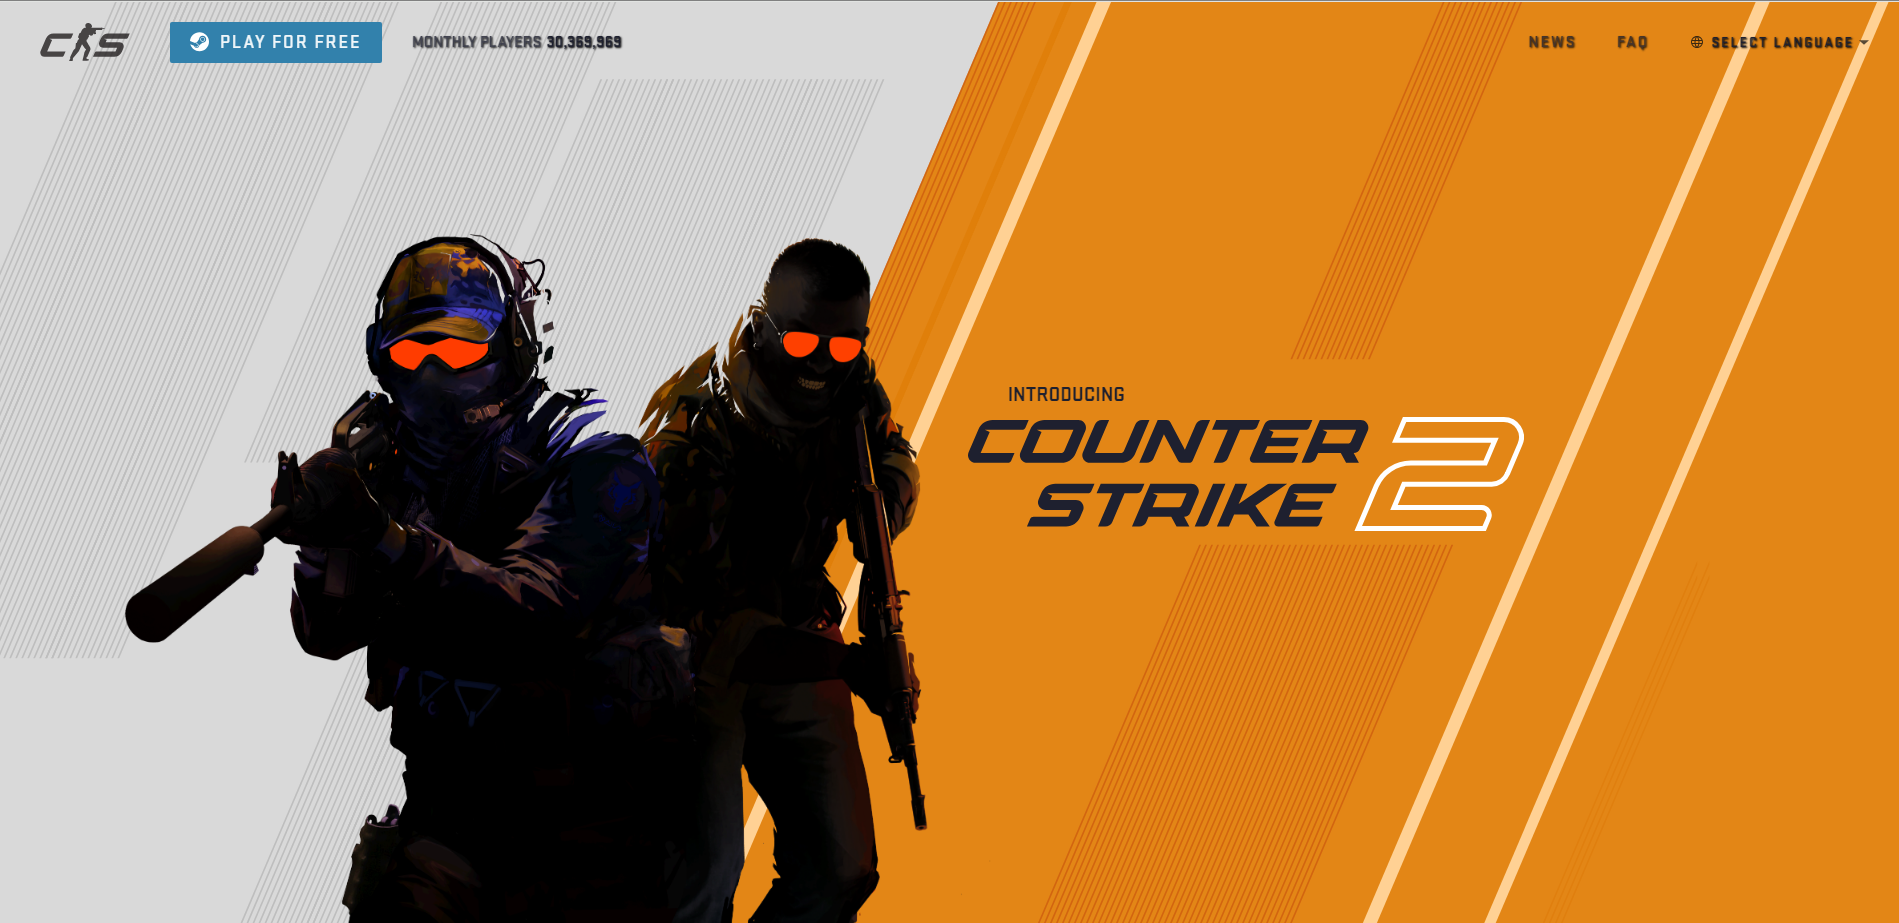 : Counter-Strike 2